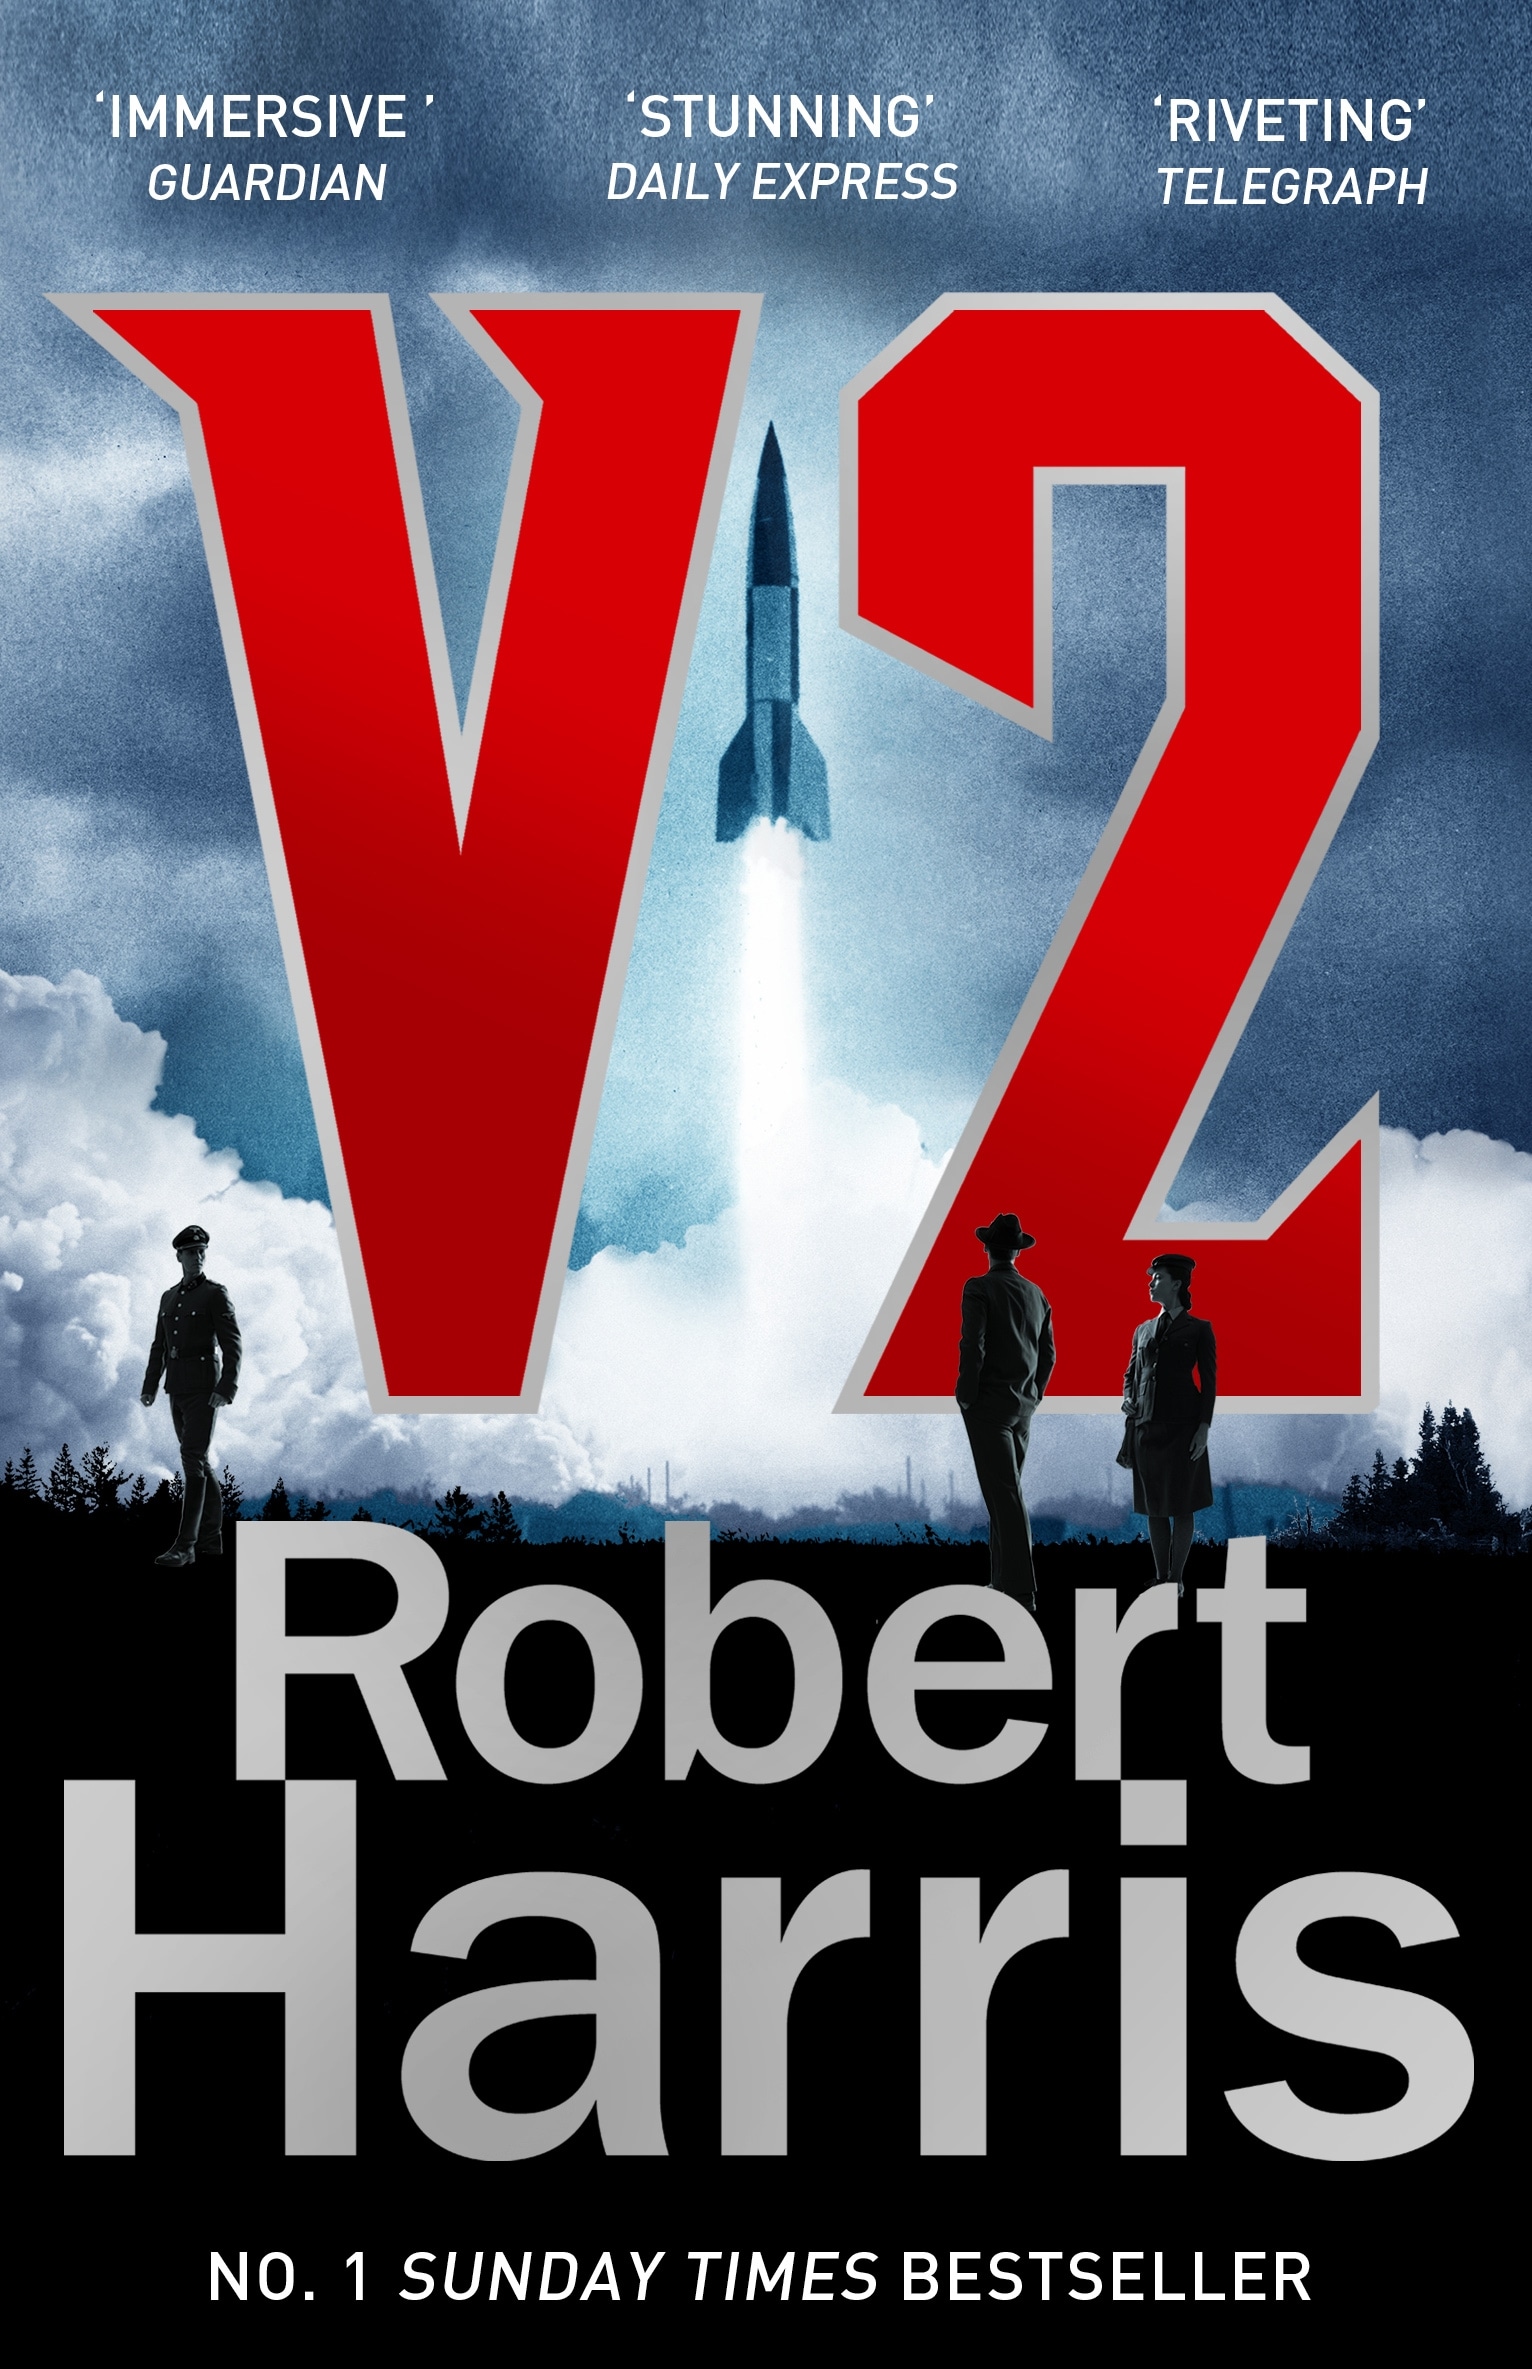 Book “V2” by Robert Harris — July 8, 2021